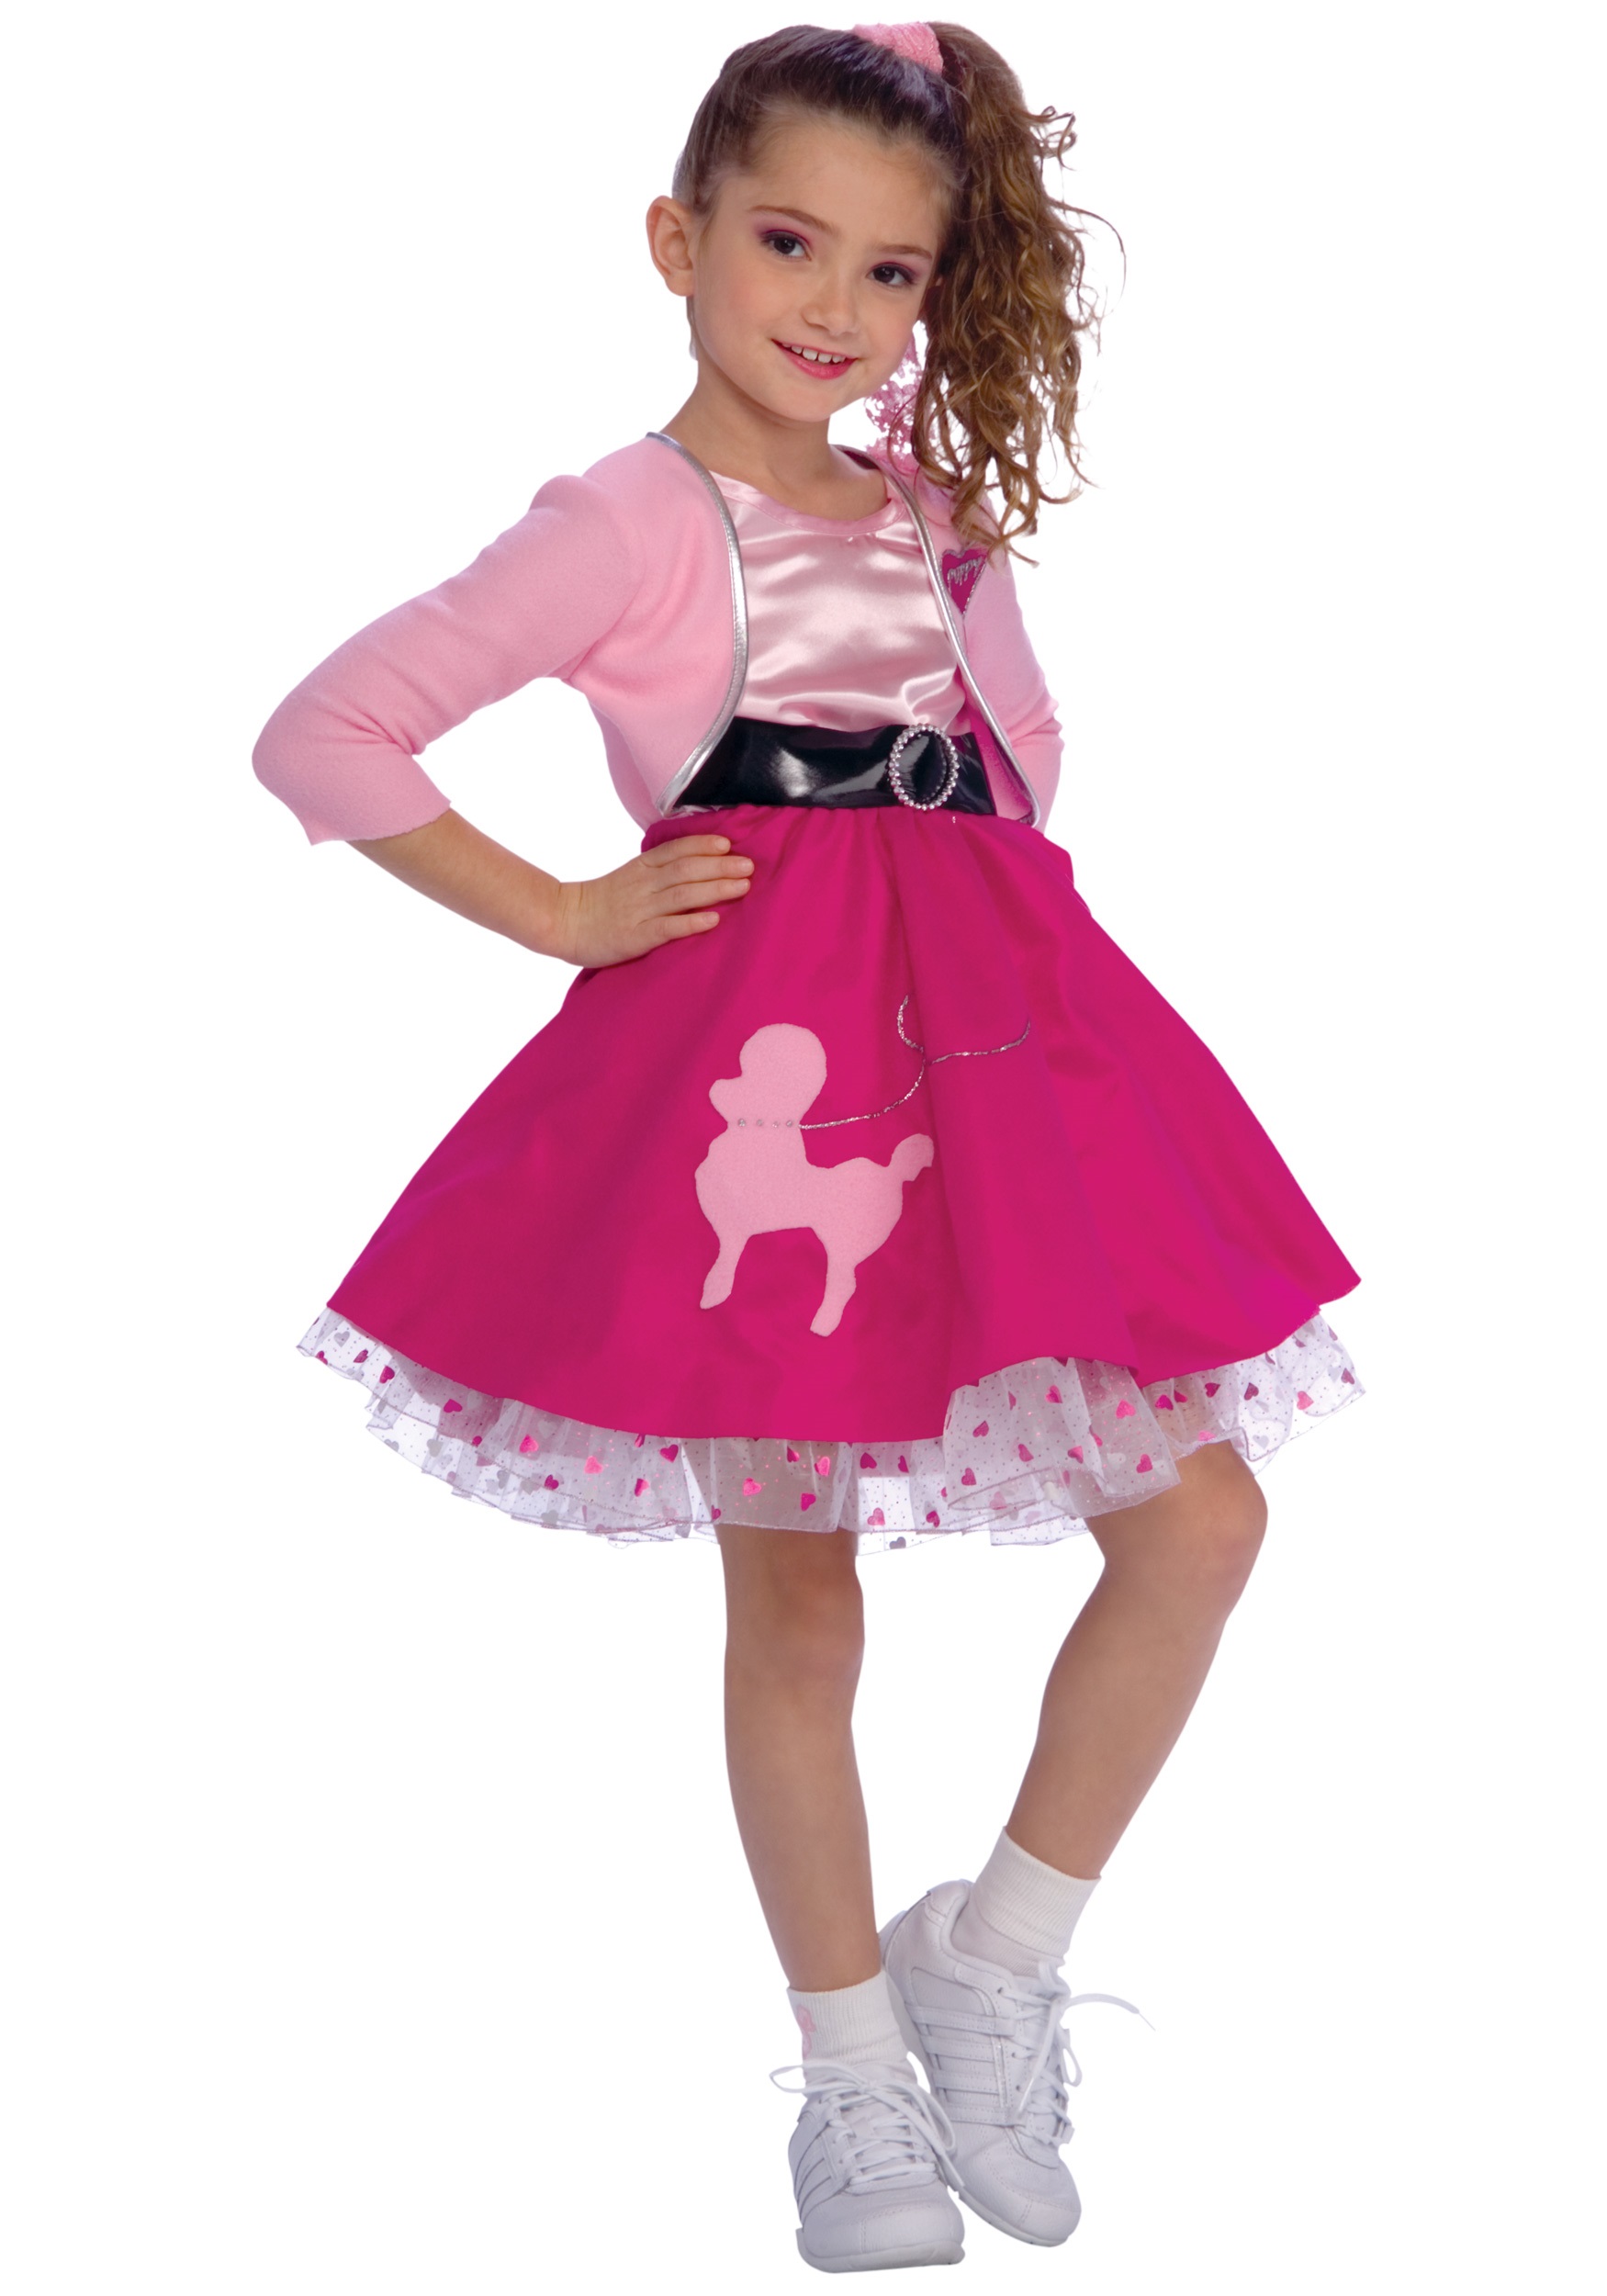 Pink Poodle Skirt Girls Fancy Dress Costume